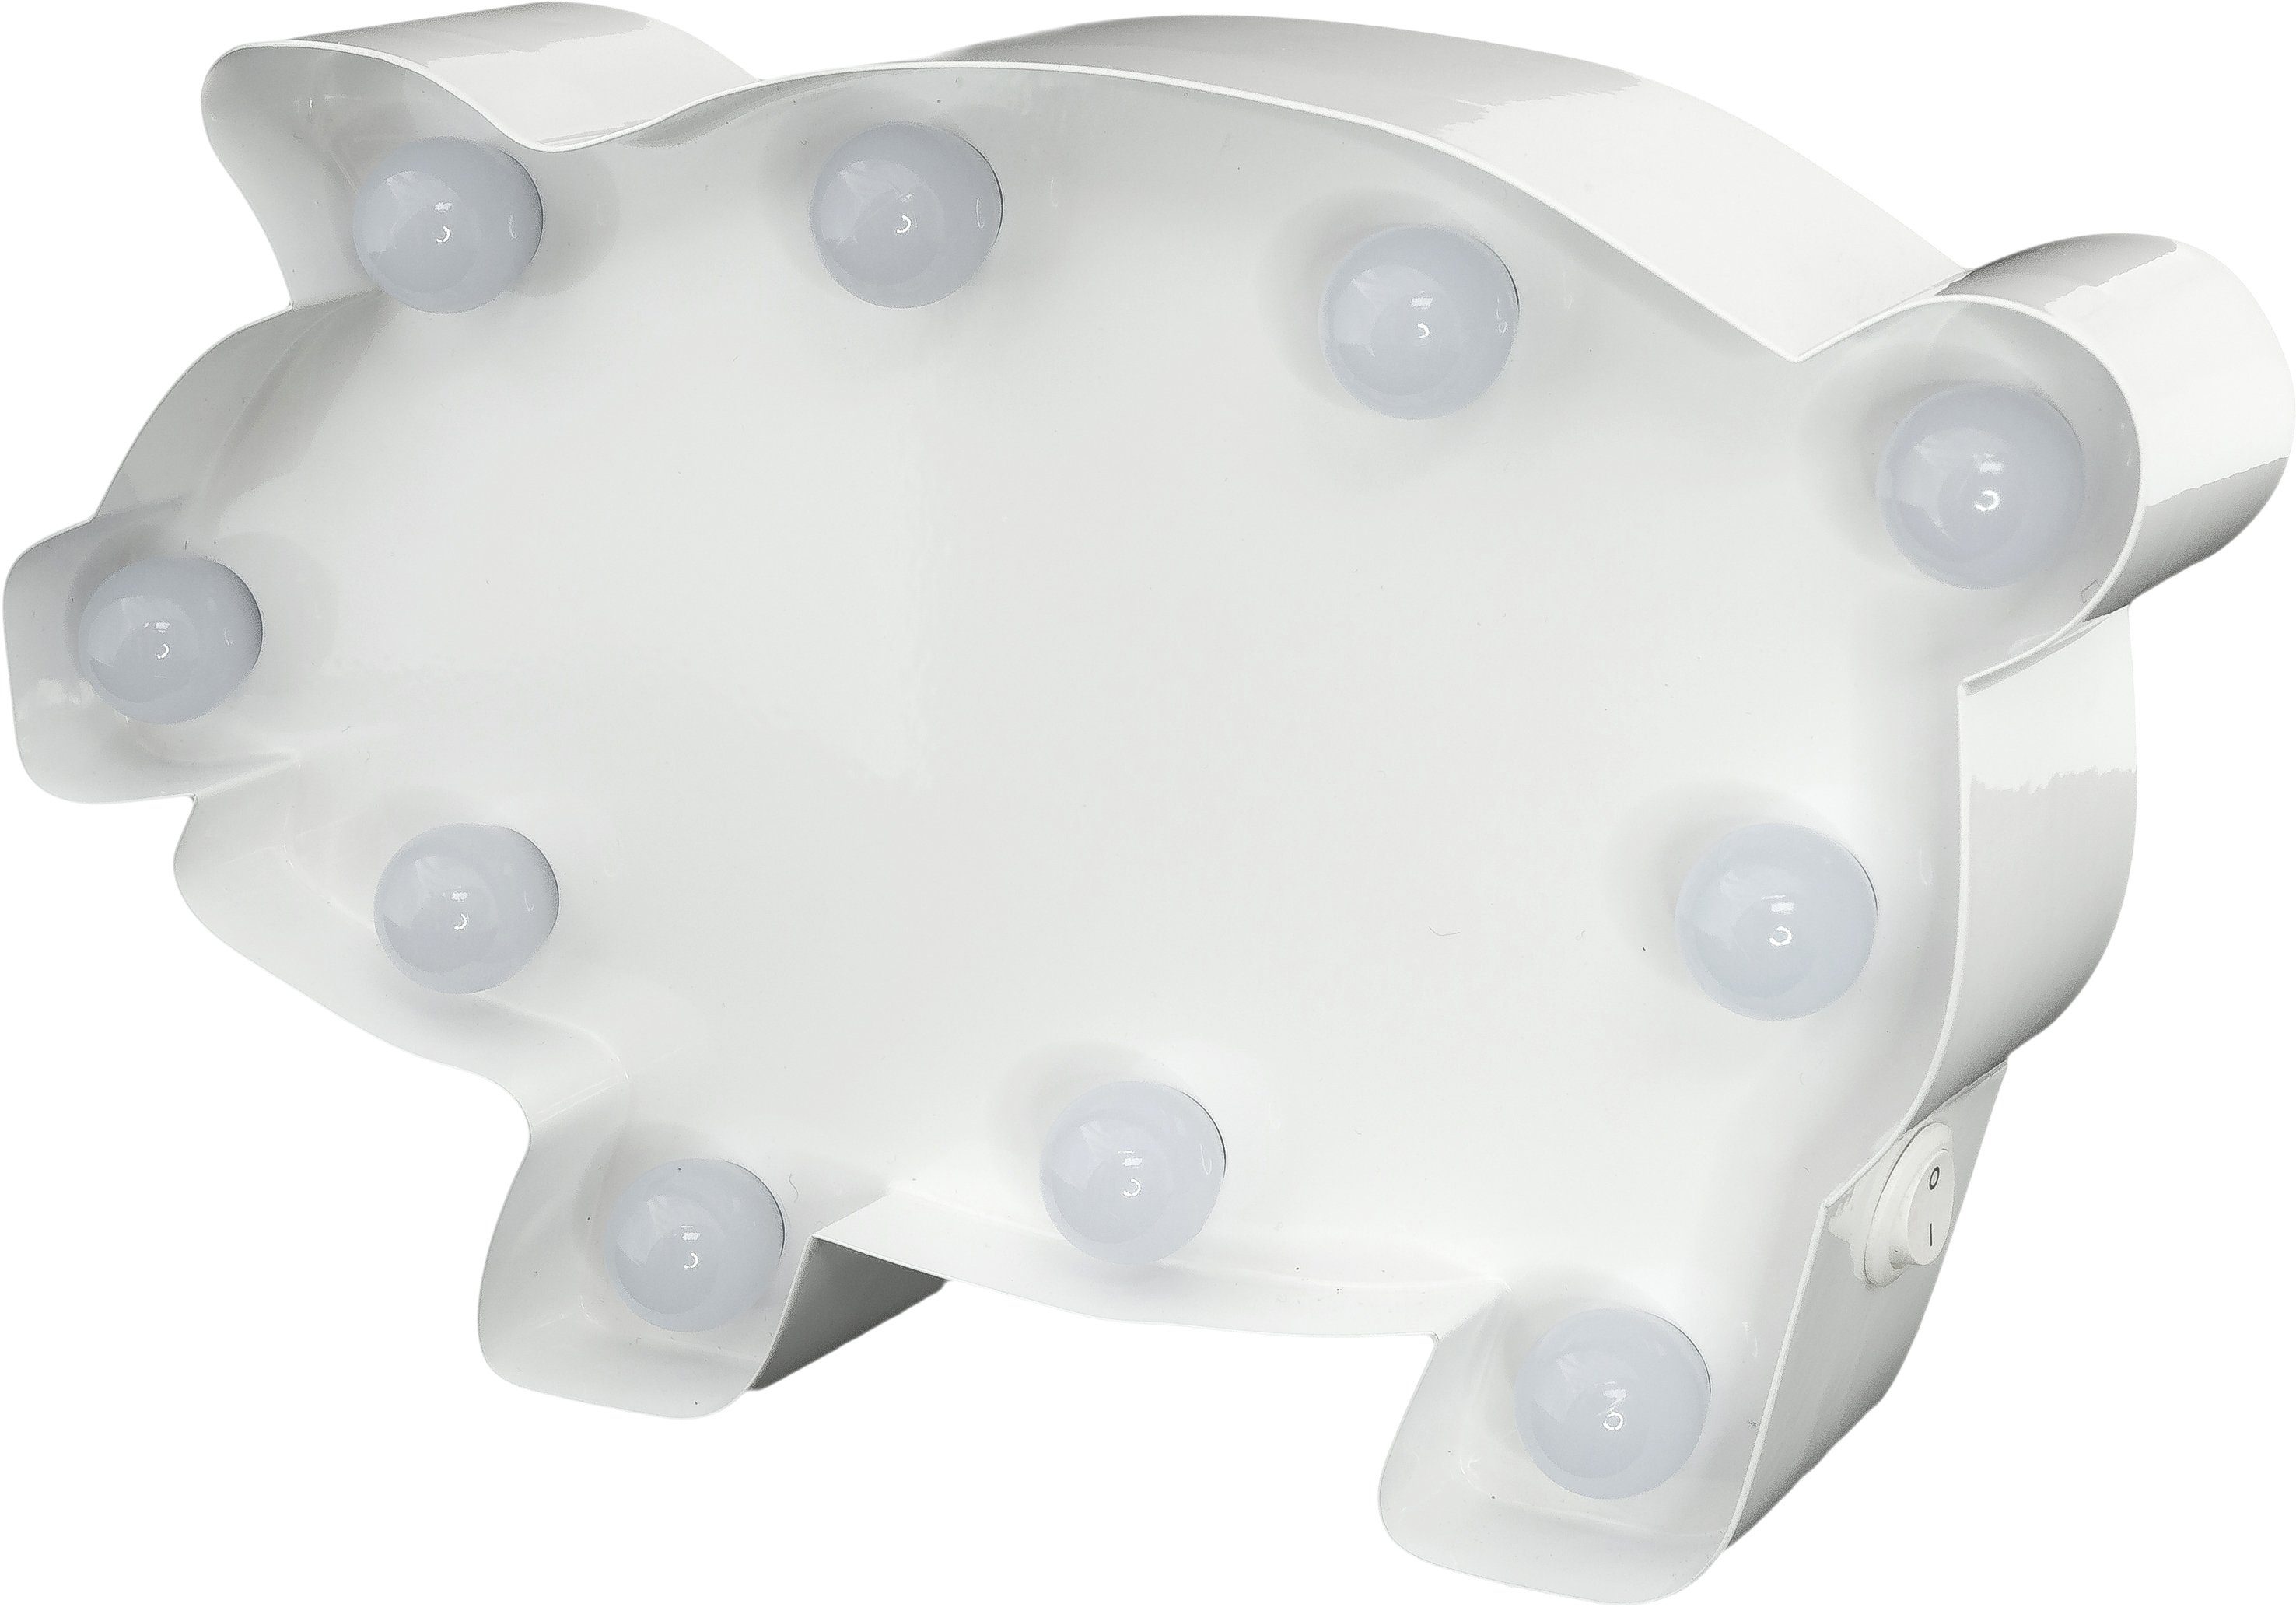 cm LED mit Wandlampe, Dekolicht festverbauten 10 Warmweiß, LIGHTS MARQUEE LEDs - 23x14 Pig LED Pig, Tischlampe integriert, fest